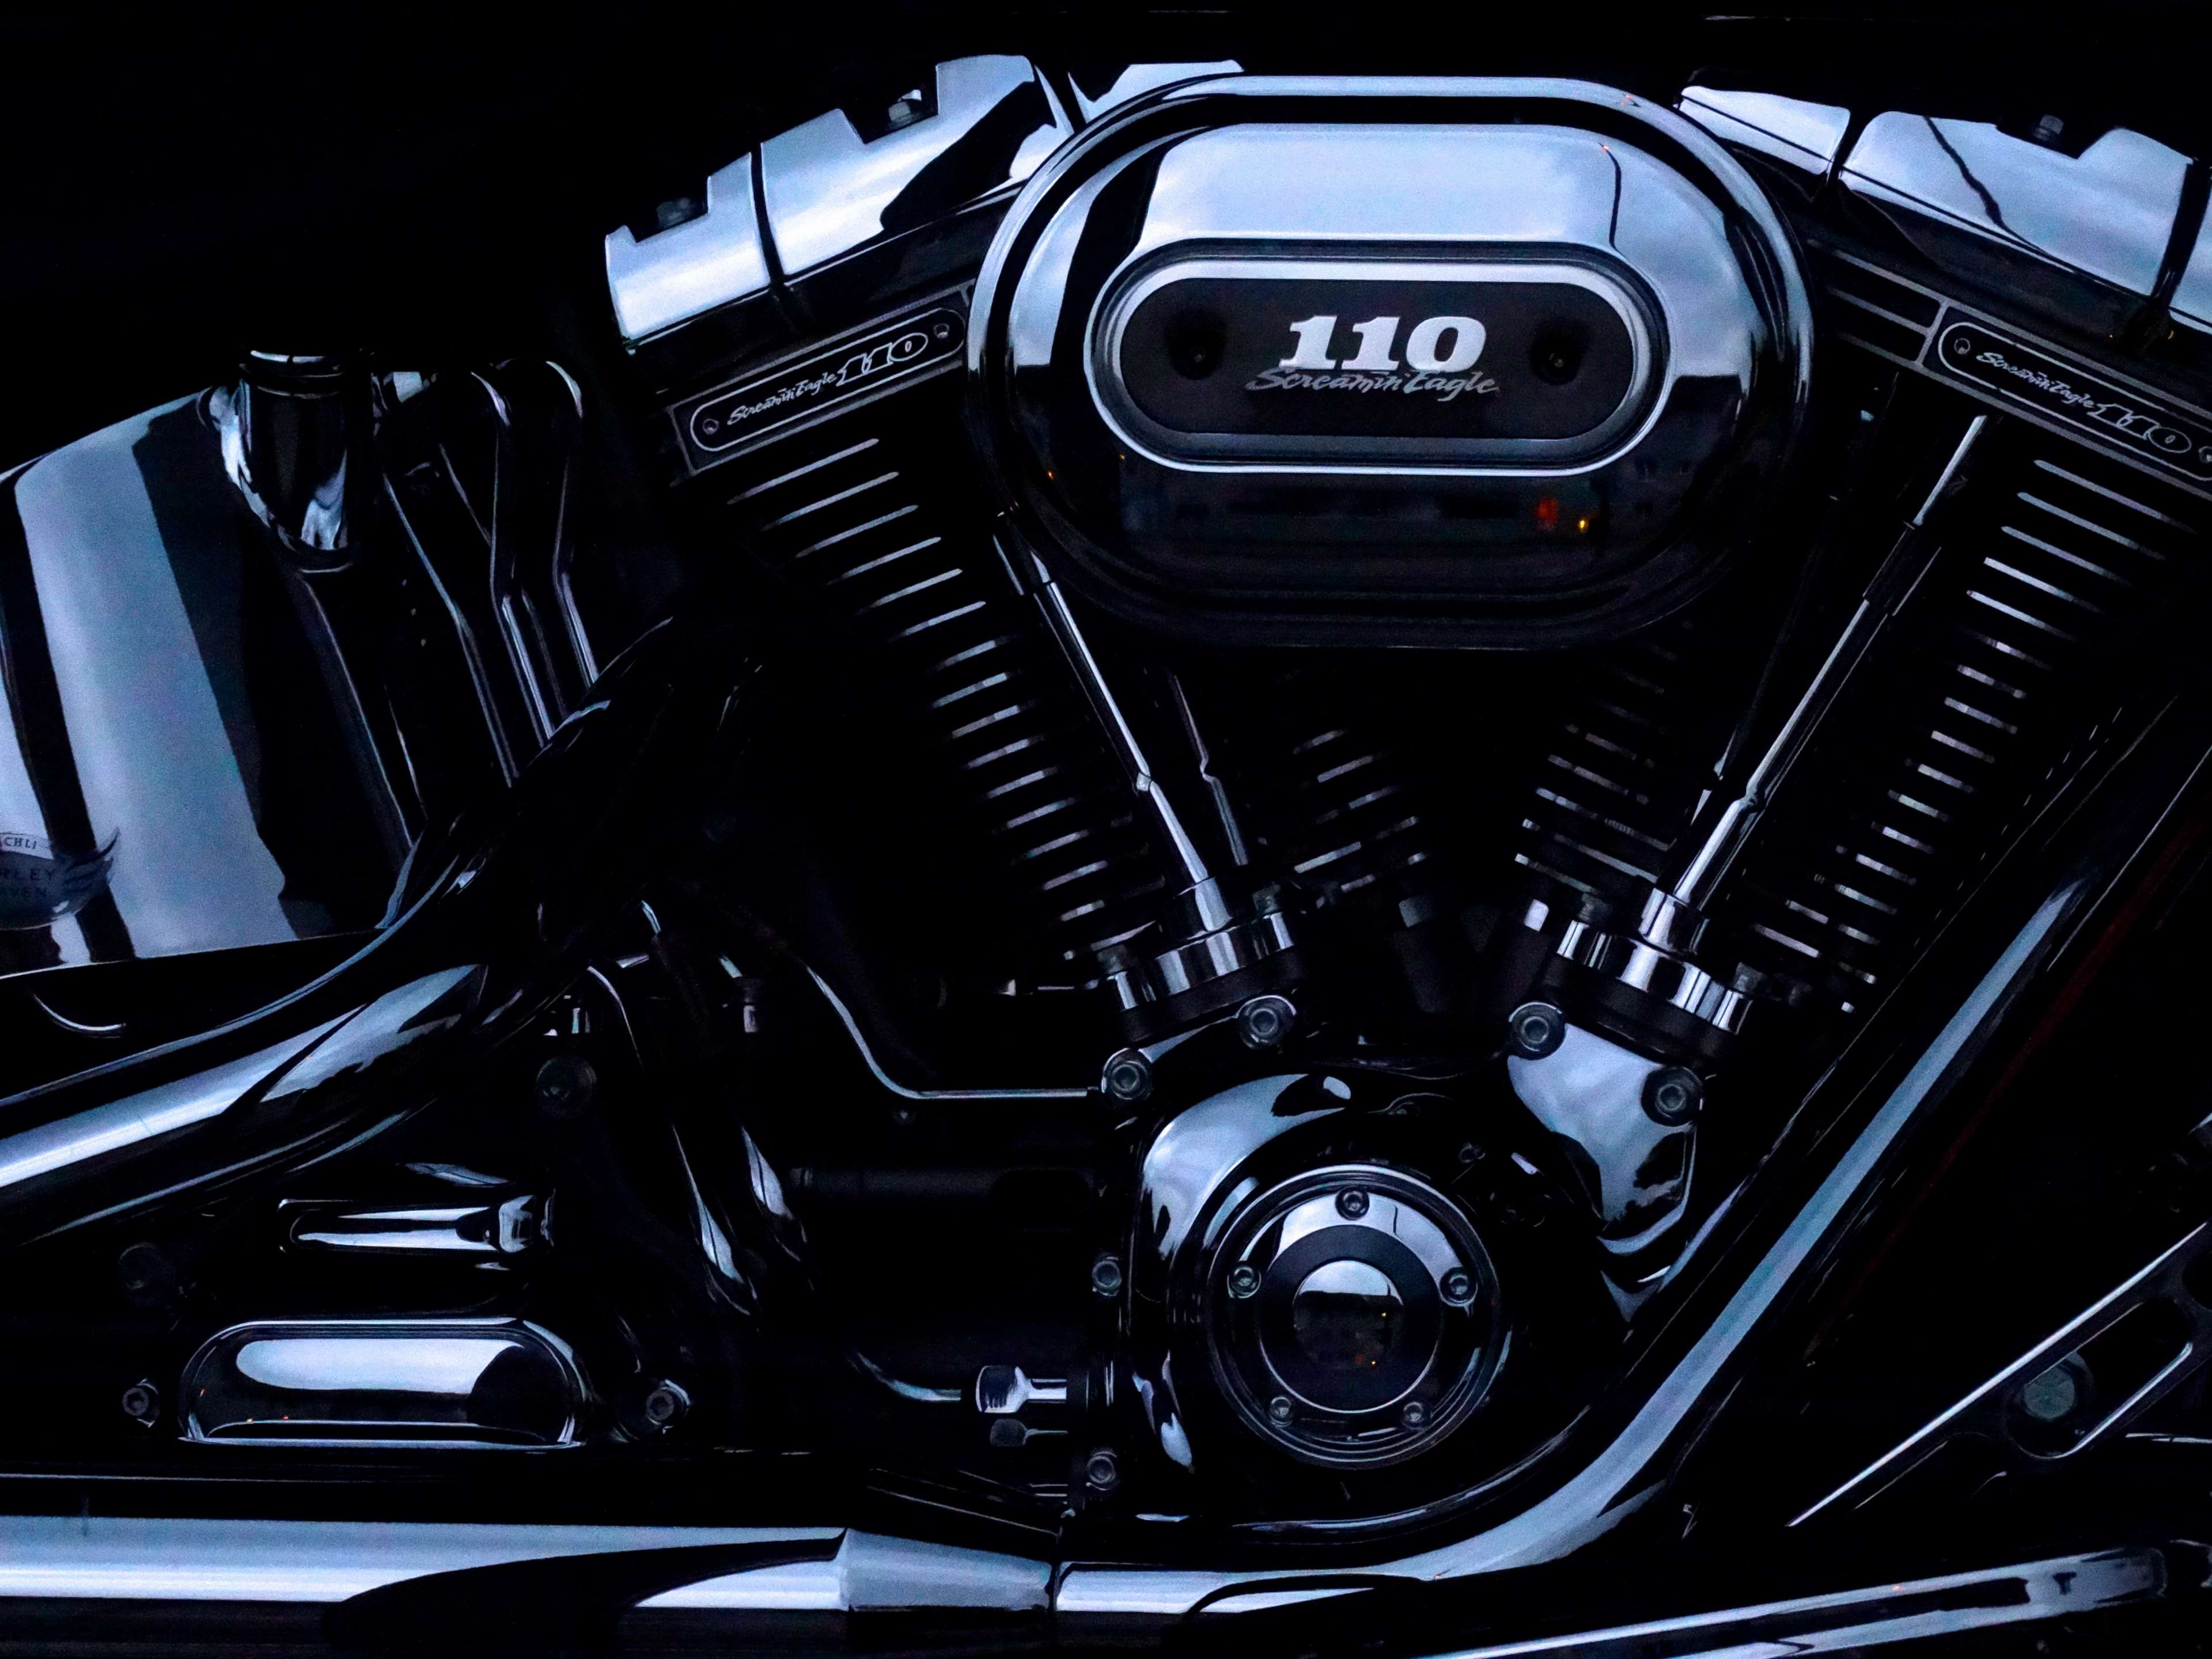 black, chrome, harley davidson, metal, motor, motorcycle engine, motorcycles, shiny 4k wallpaper